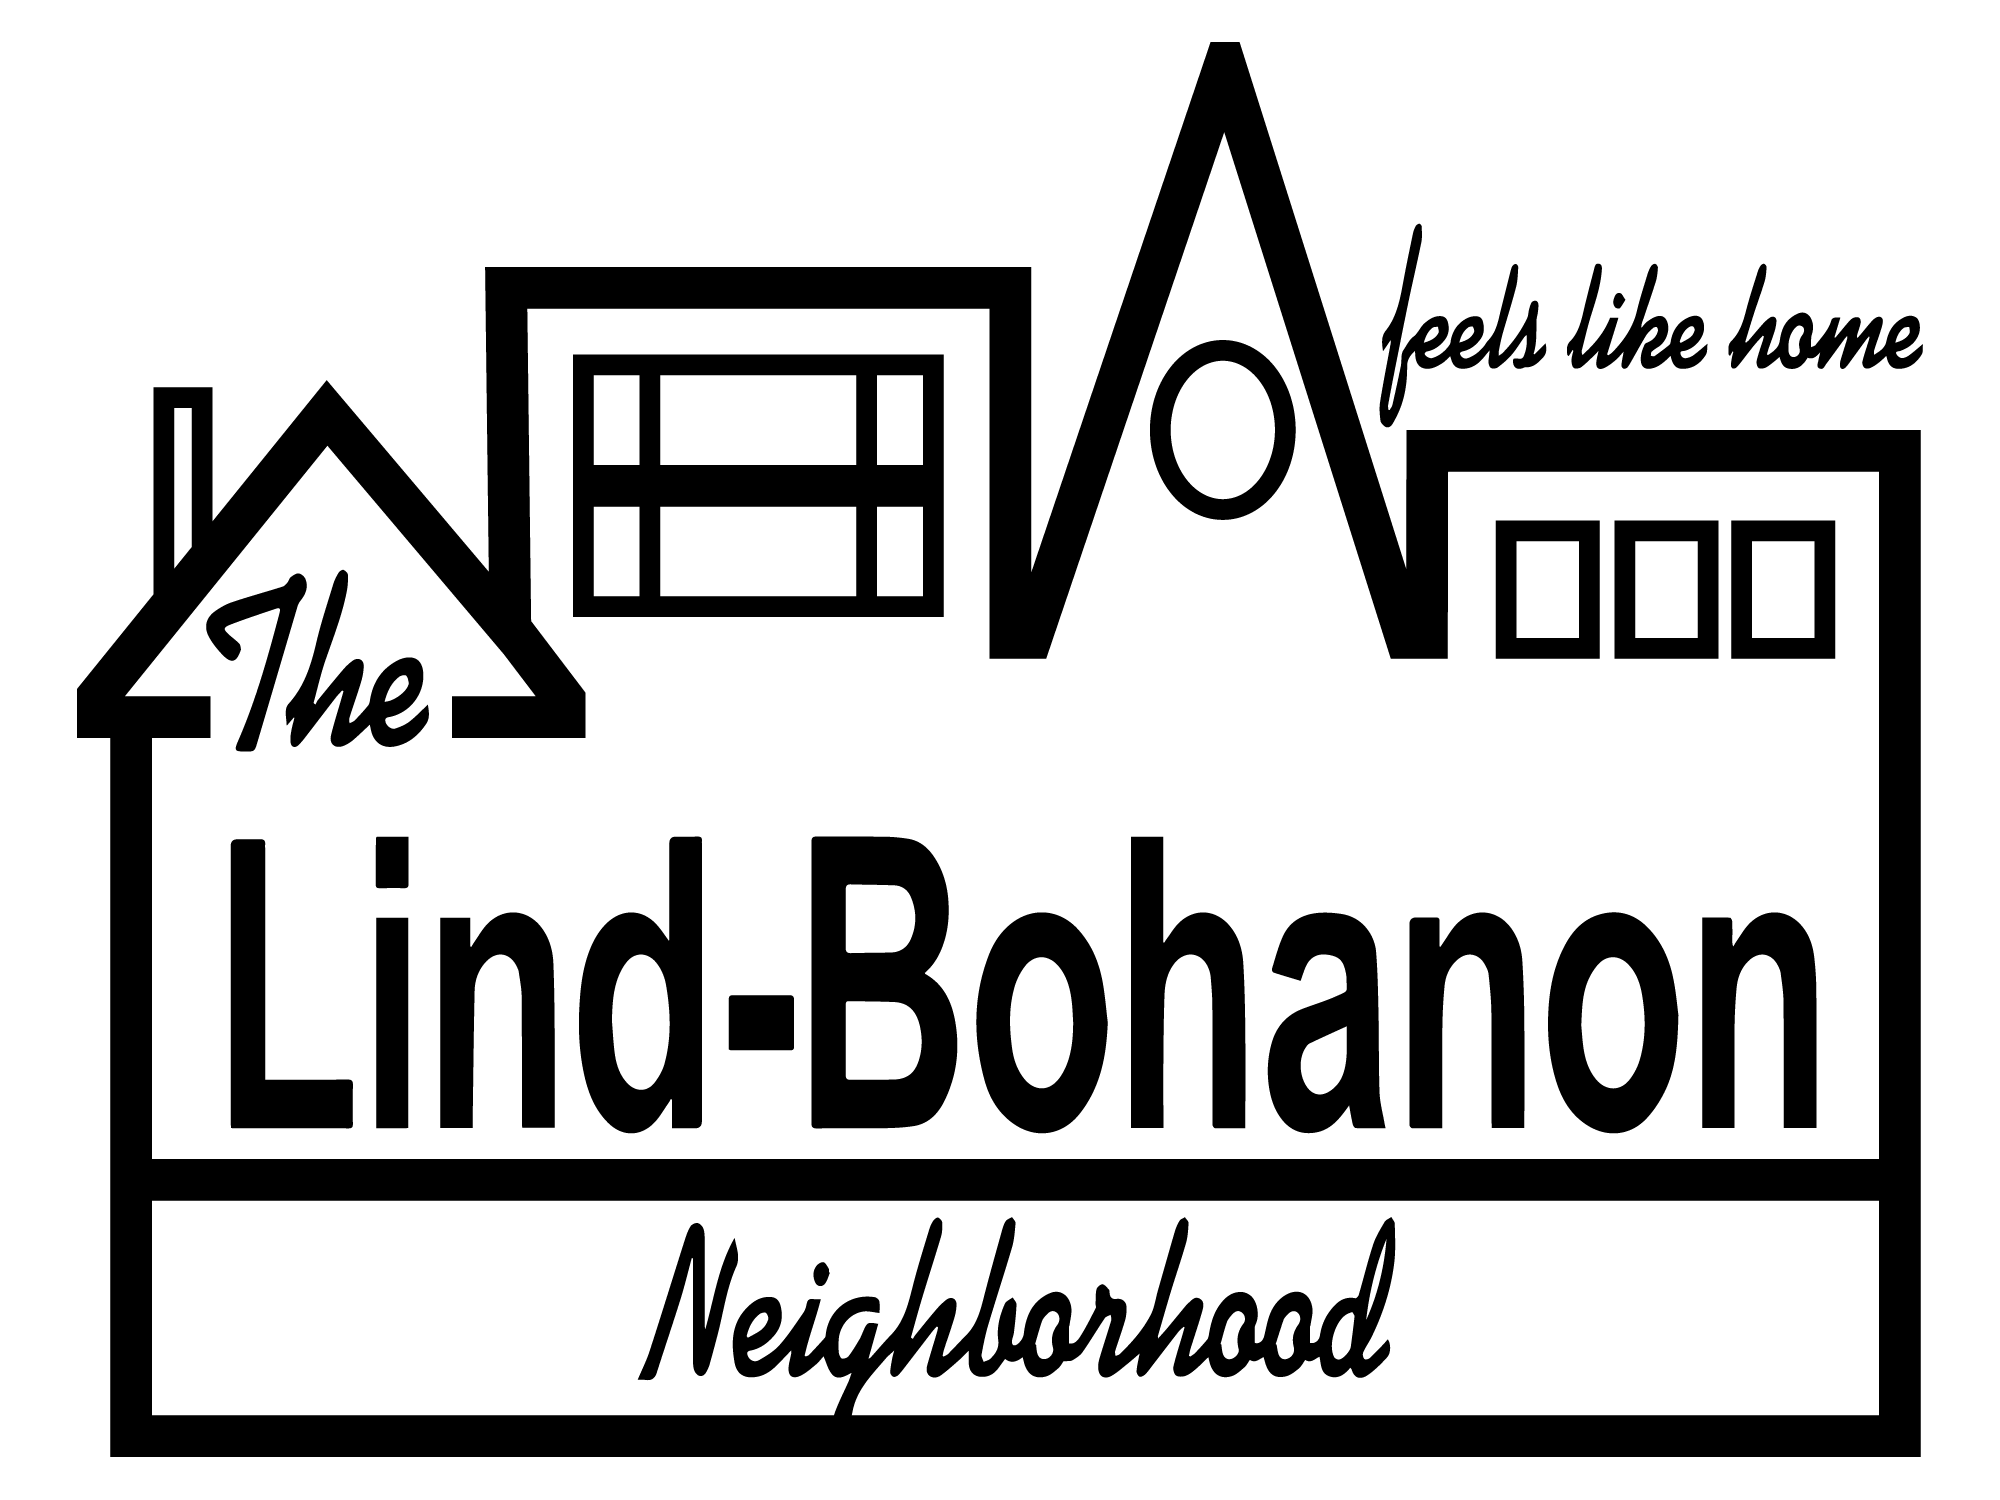 Lind-Bohanon logo set: black logo with slogan